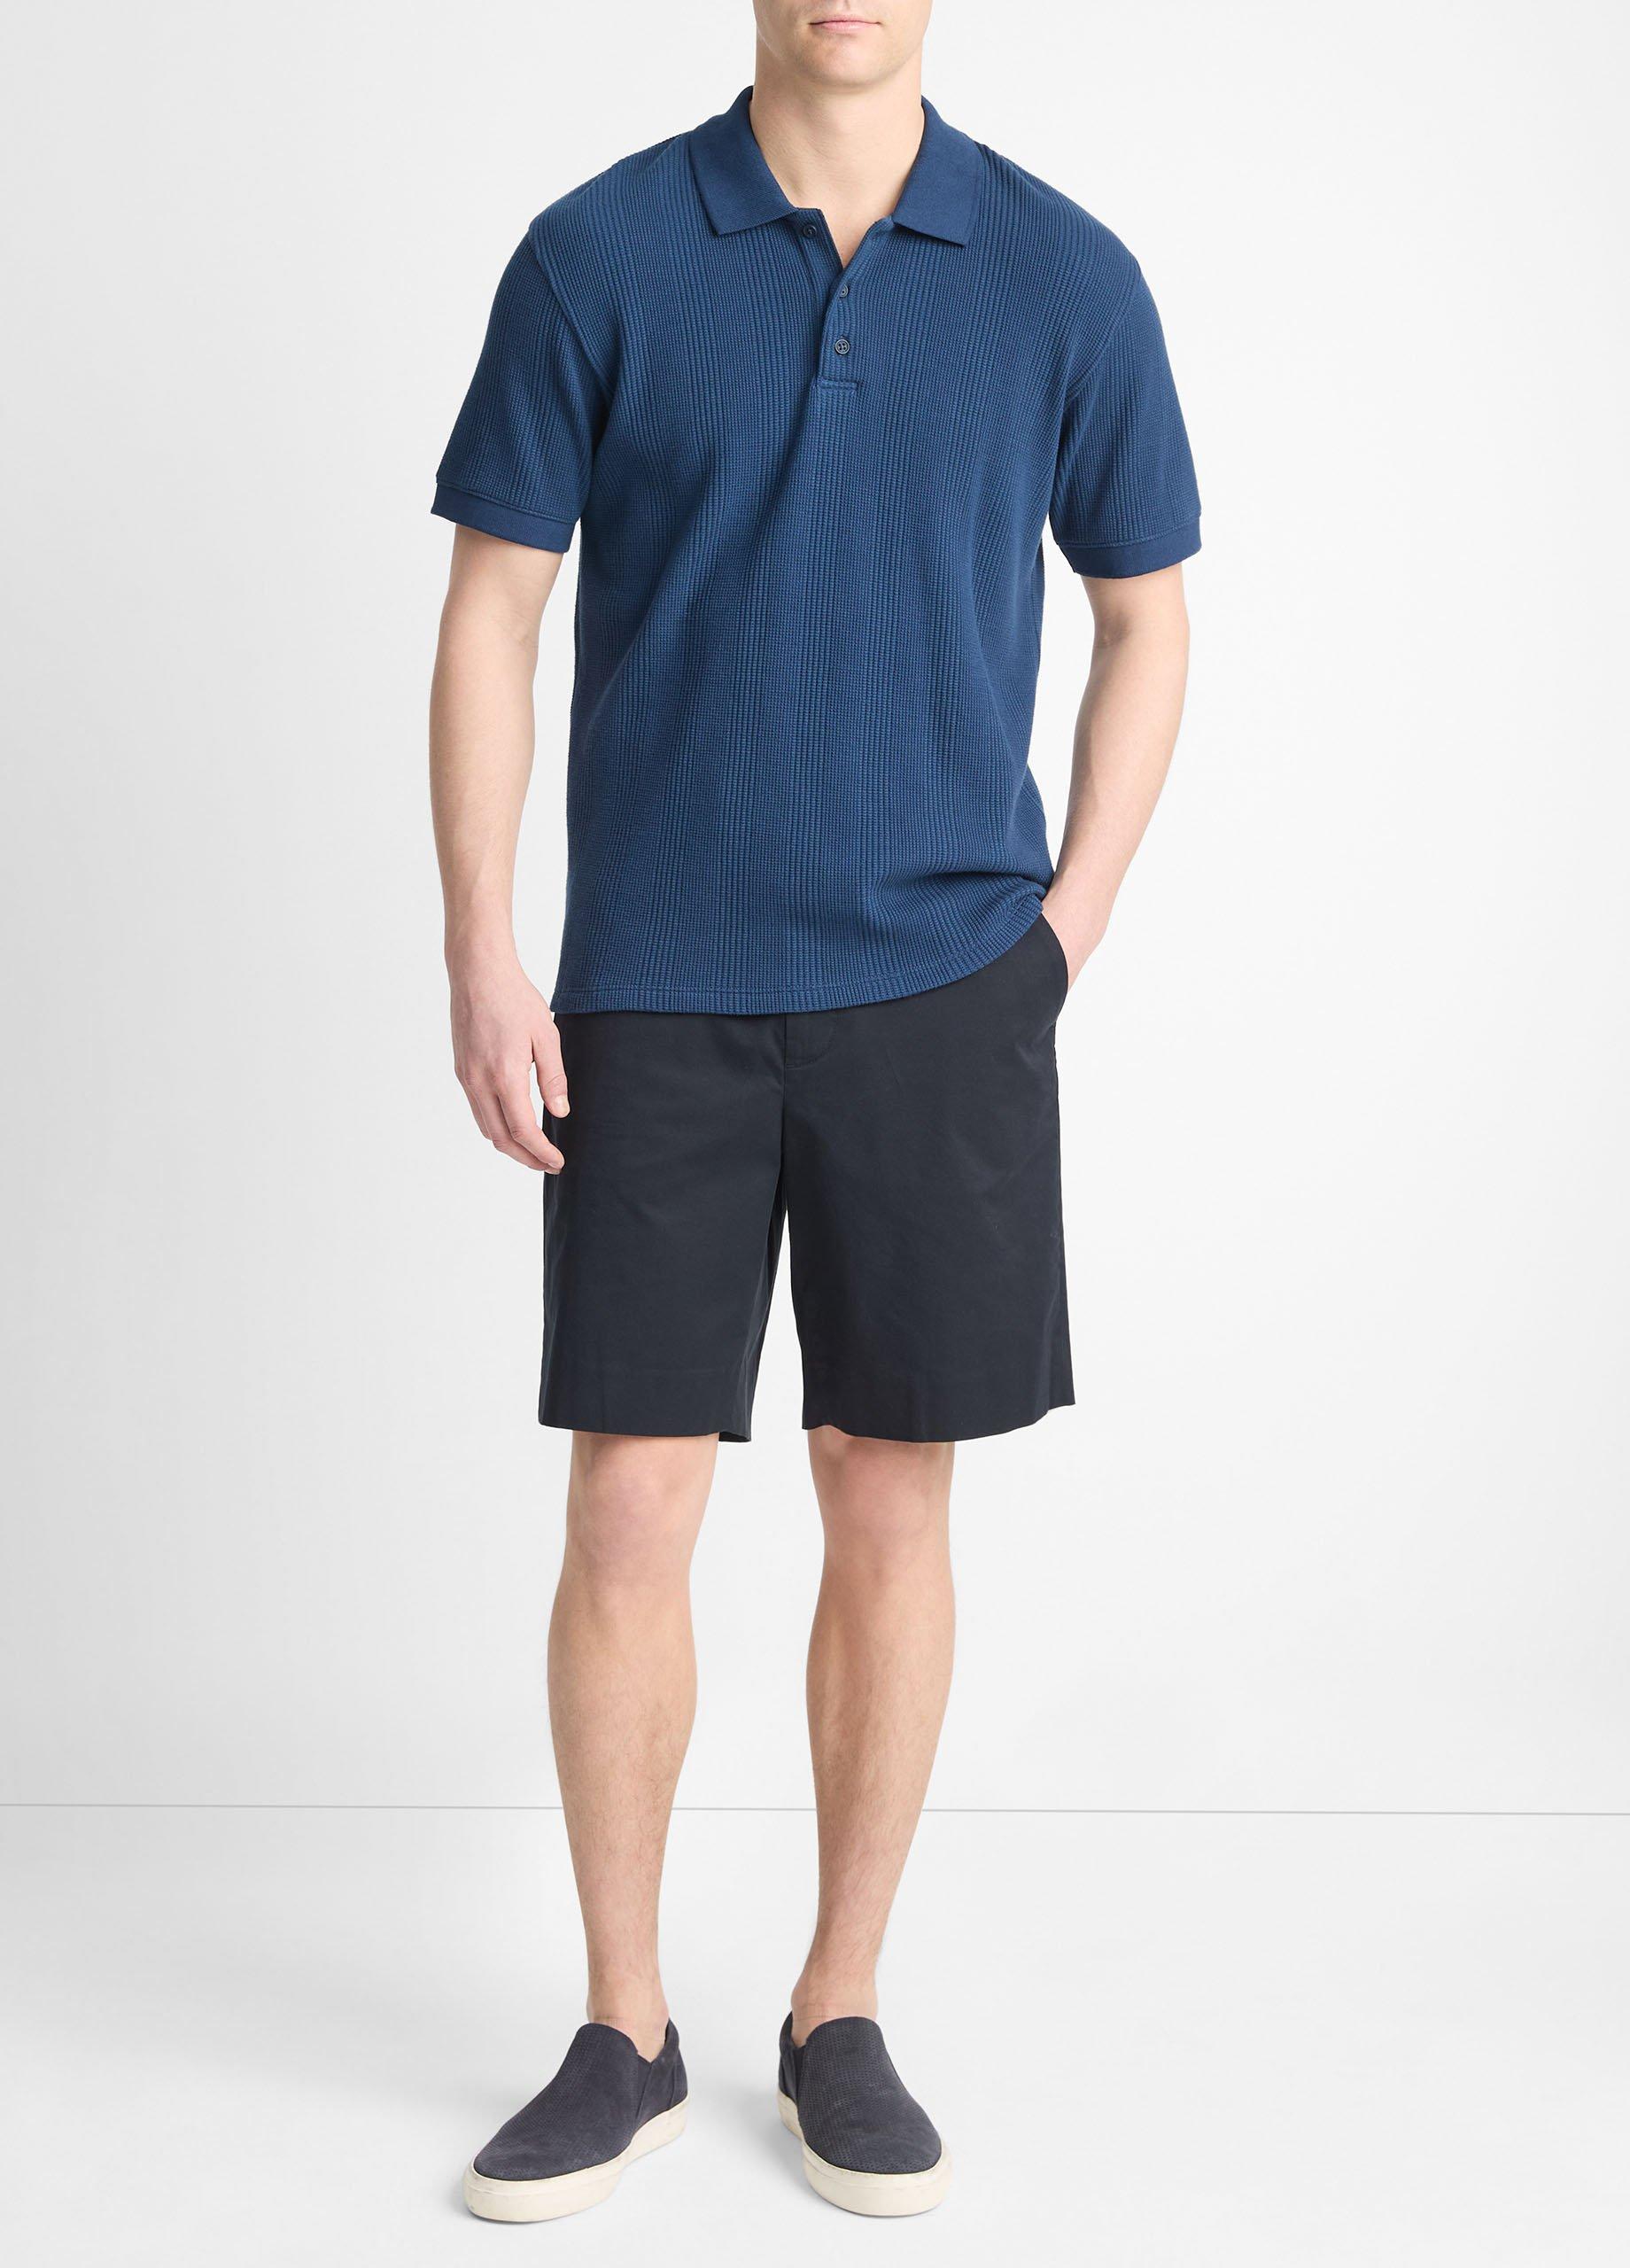 Variegated Pima Cotton Polo Shirt, Midnight Sky, Size XL Vince